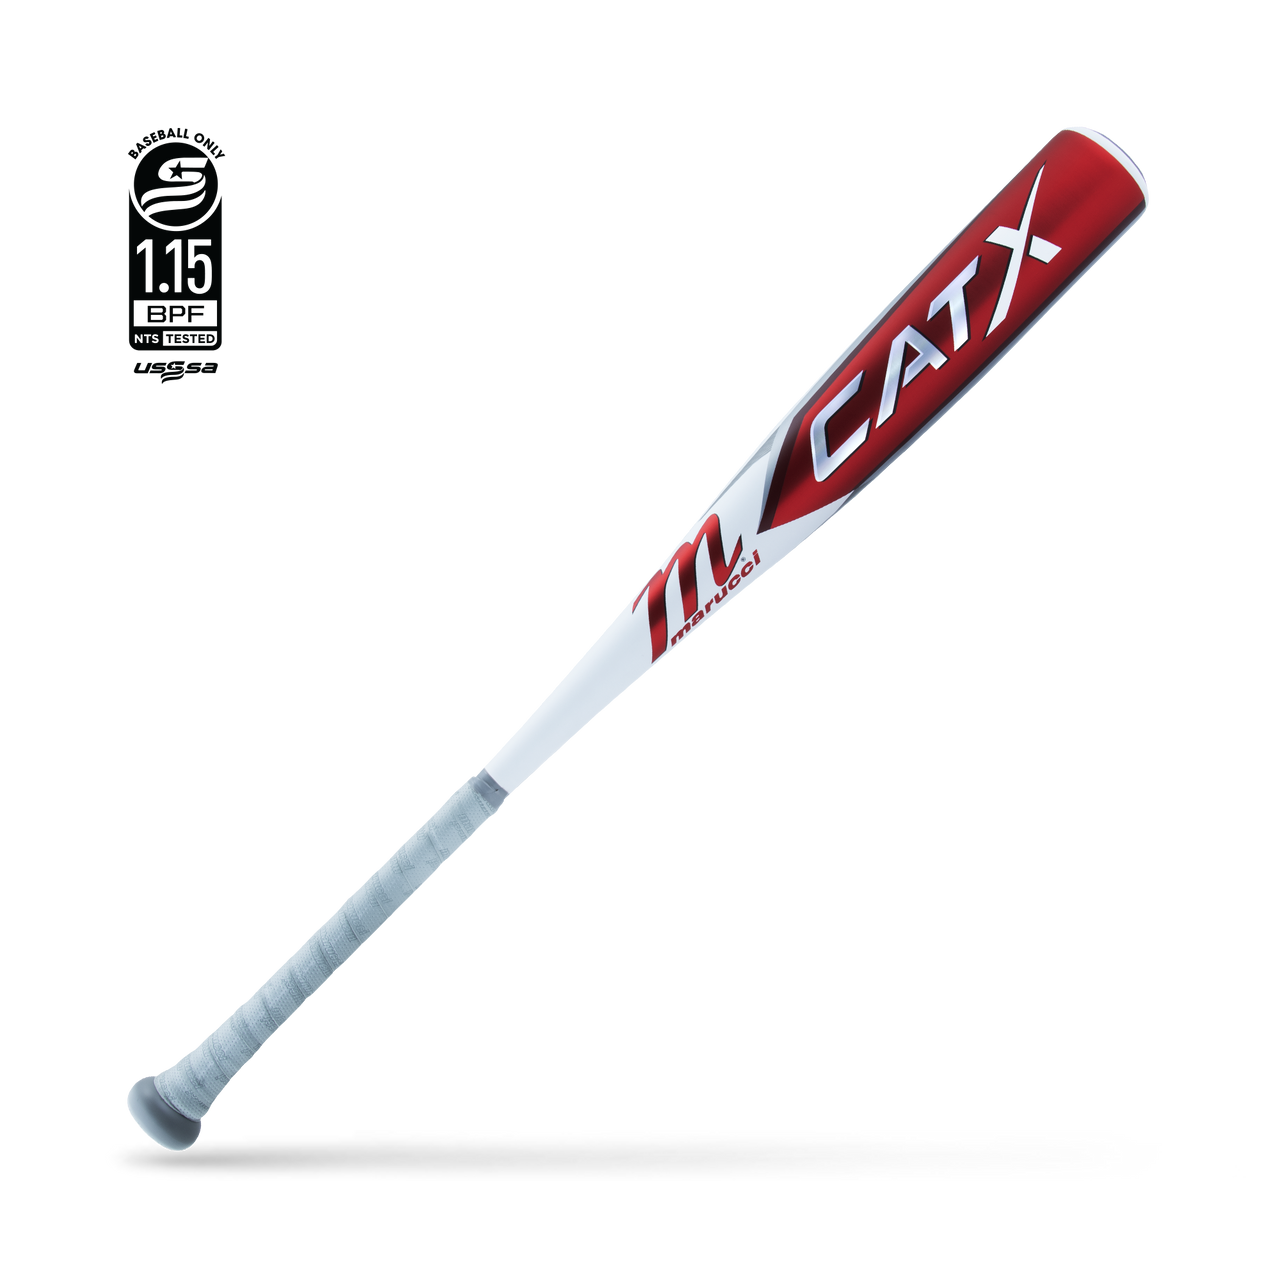 marucci-cat-x-5-usssa-baseball-bat-31-inch-26-oz MSBCX5-3126 Marucci  The CATX Senior League -5 bat is engineered for peak performance